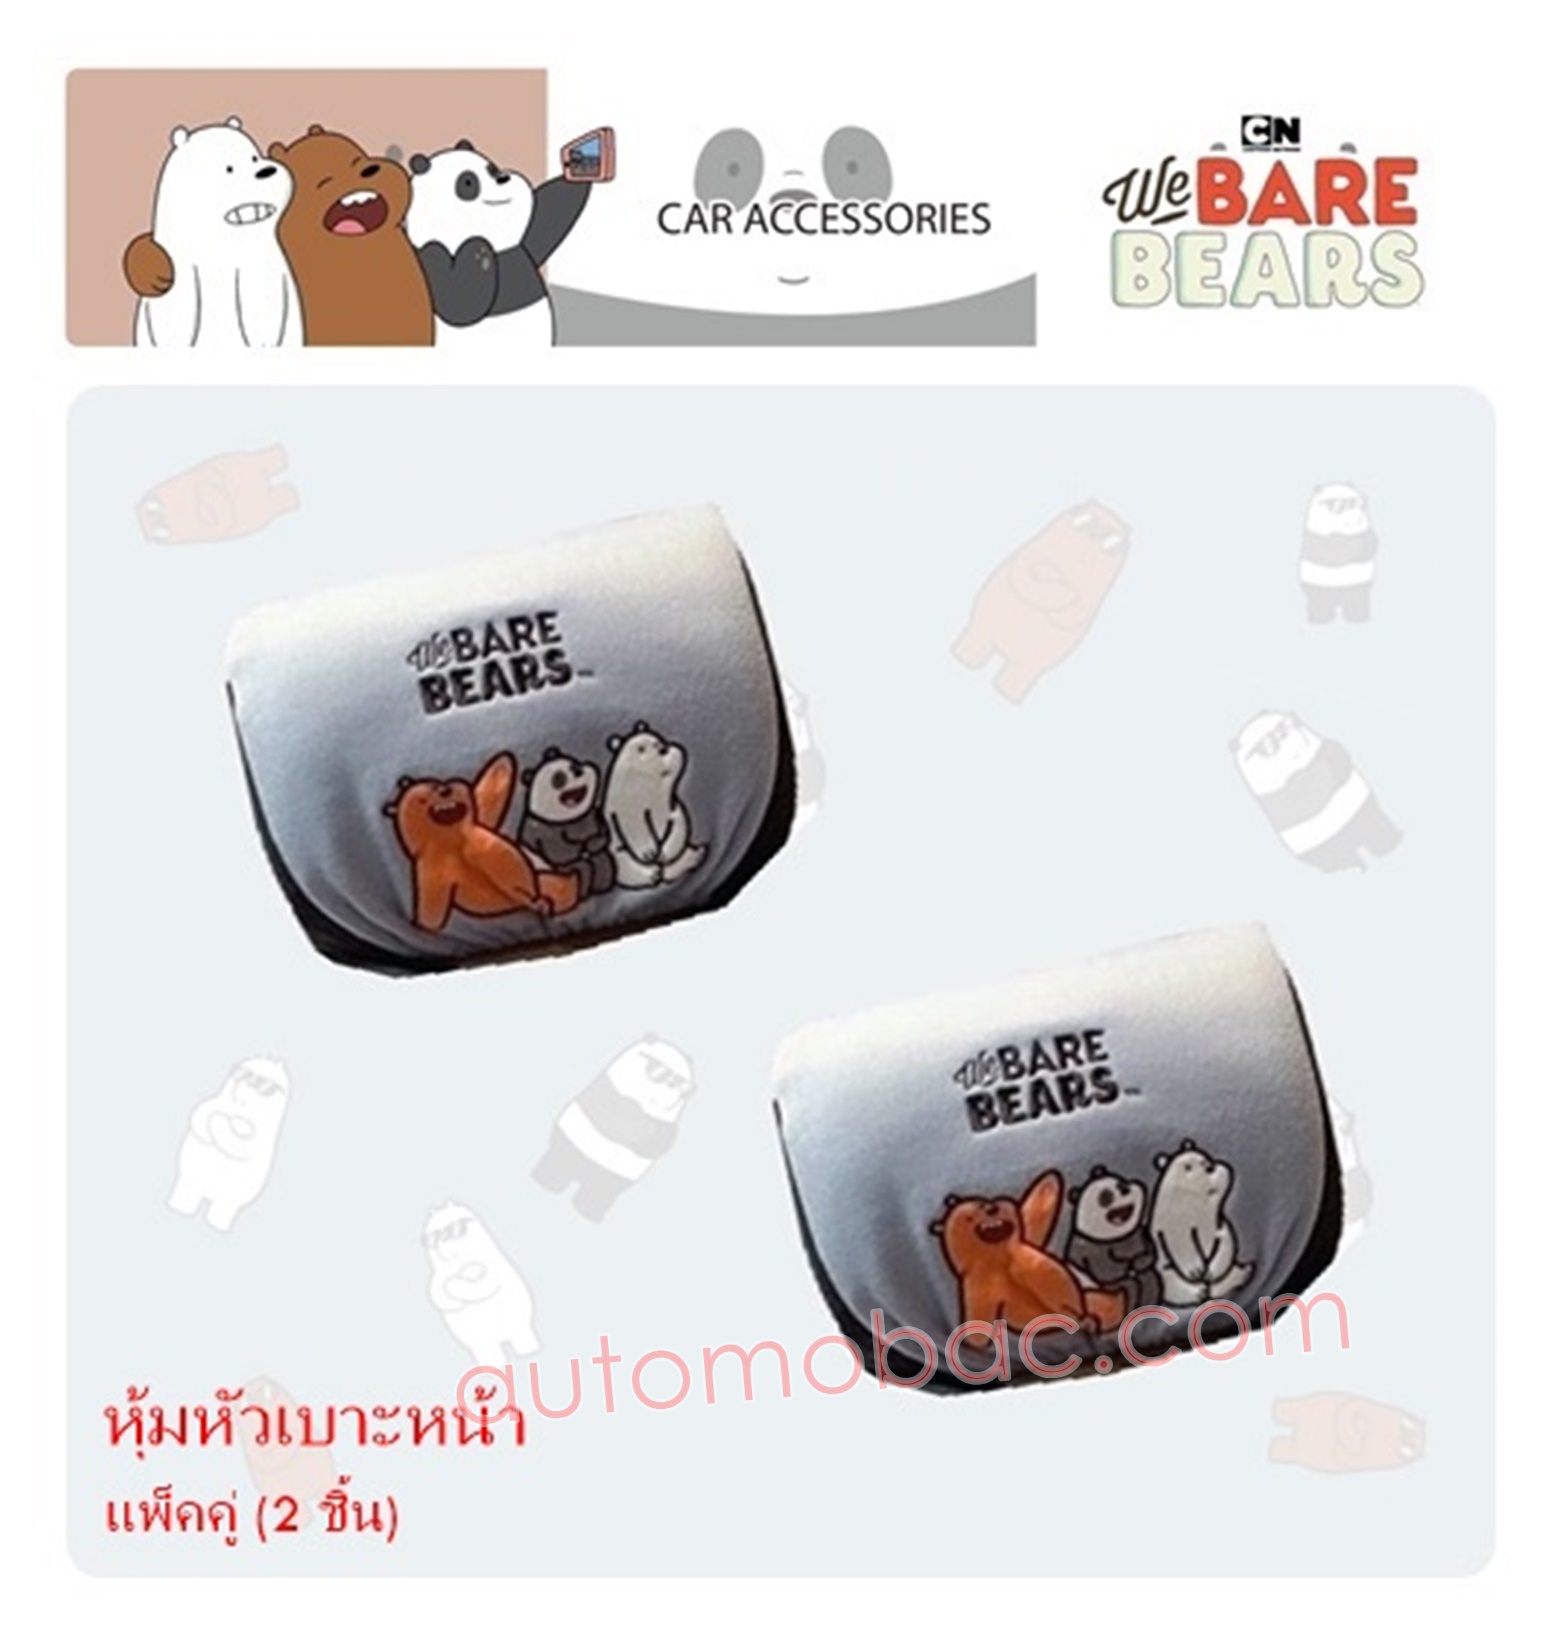 We Bare Bears ที่หุ้มหัวเบาะ 2 ชิ้น ใช้หุ้มหัวเบาะรถยนต์ ปกป้องหัวเบาะจากความร้อน รอยขีดข่วน แท้